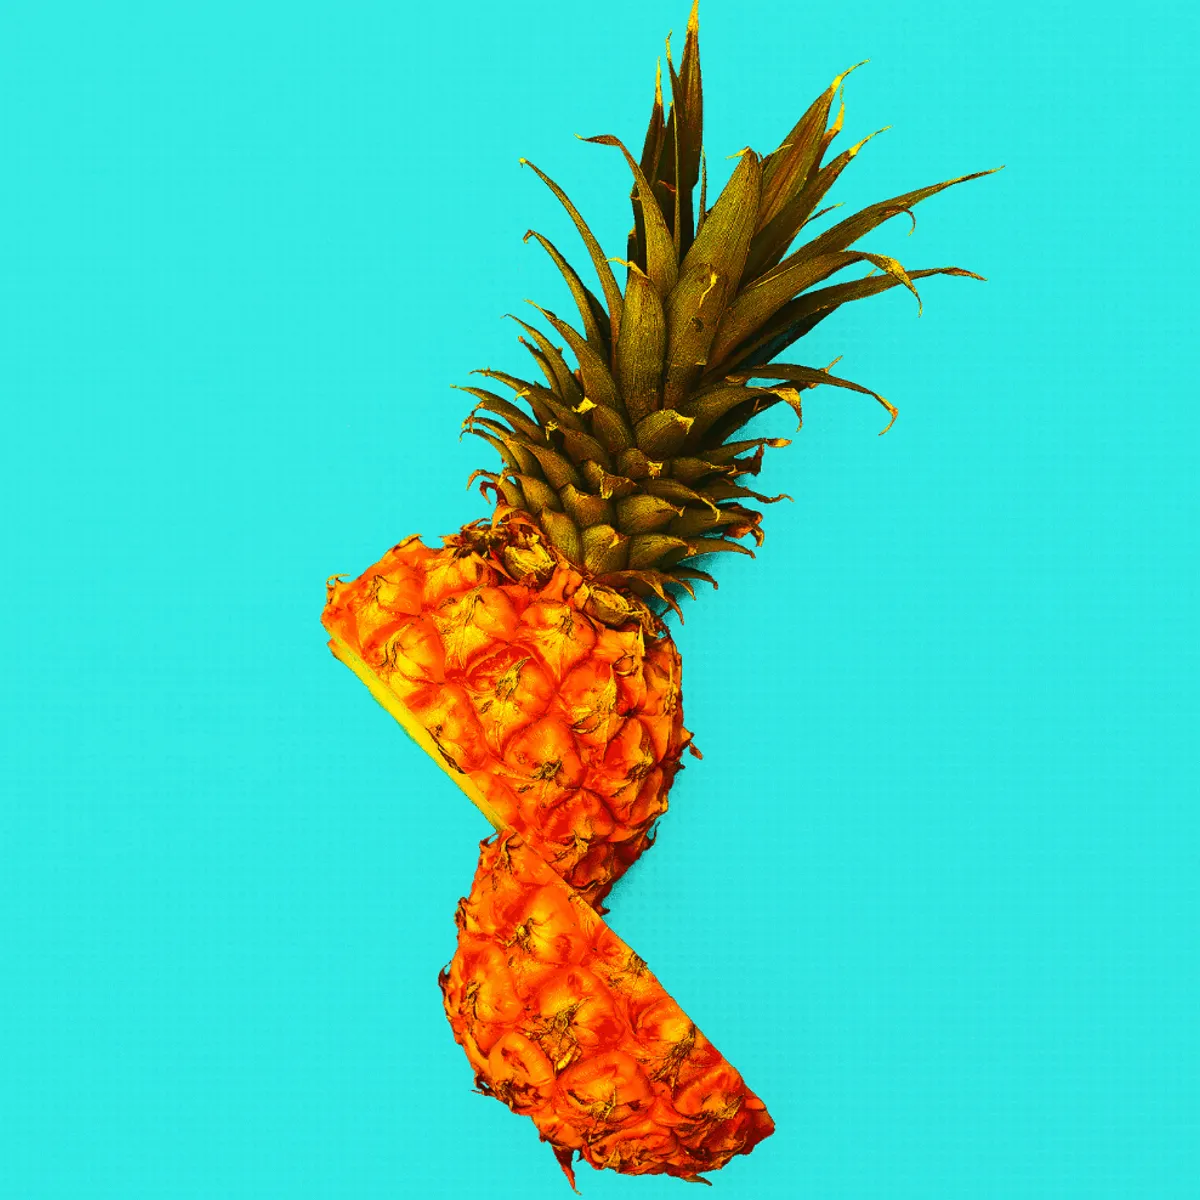 Split pineapple